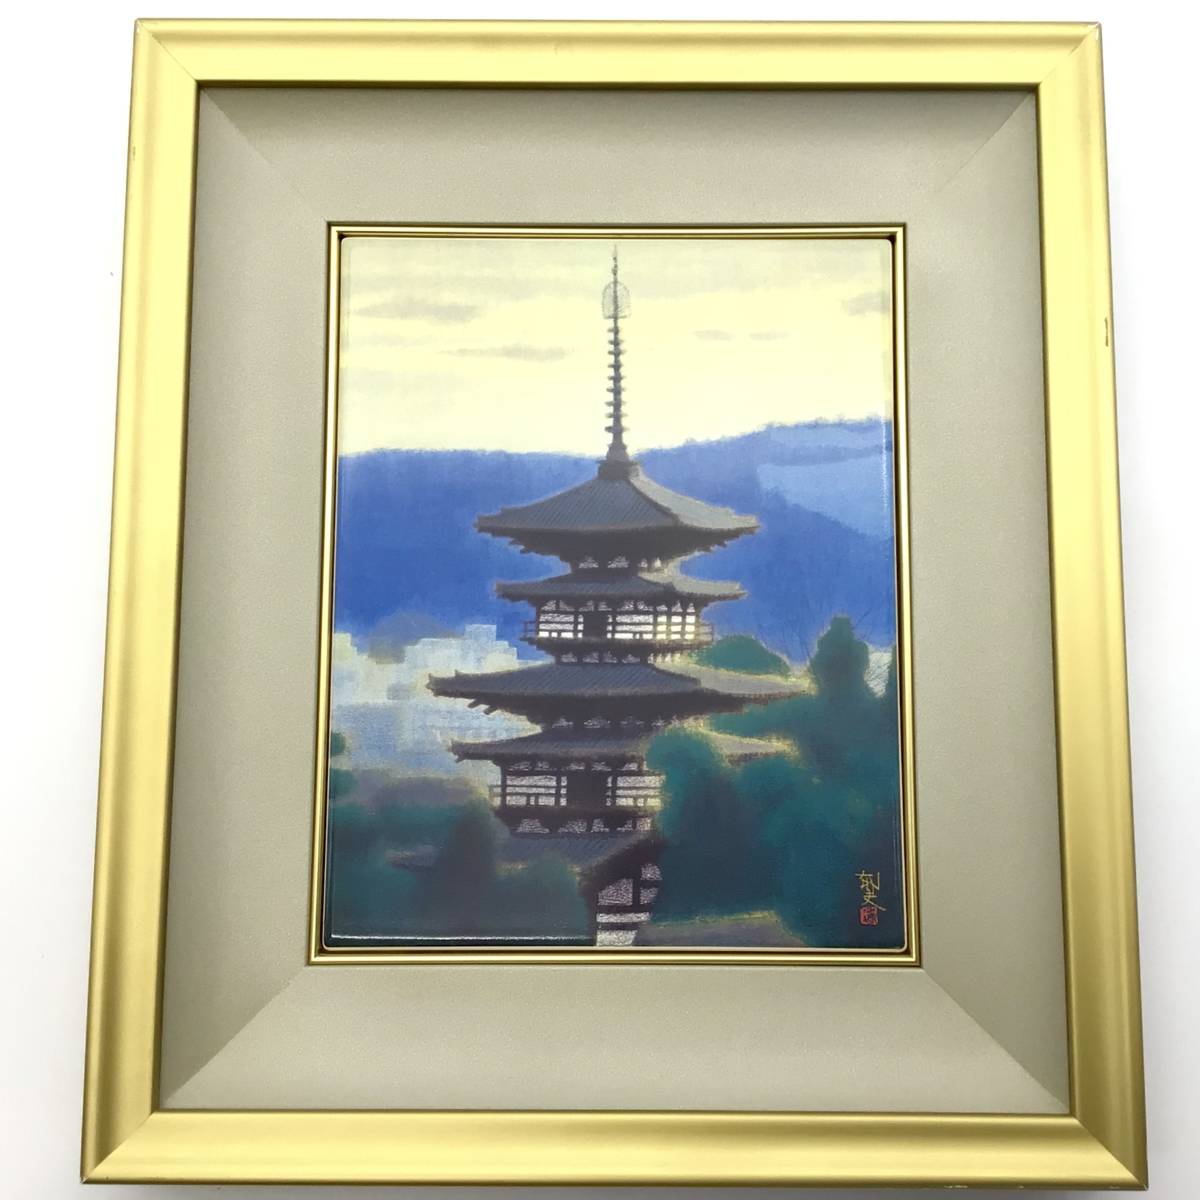 ◆◇इकुओ हिरयामा सिरेमिक बोर्ड पेंटिंग याकुशीजी ईस्ट टॉवर फ्रेम किया गया, कॉस्मेटिक बॉक्स, प्रमाणन स्टीकर◇◆ के साथ, कलाकृति, चित्रकारी, अन्य